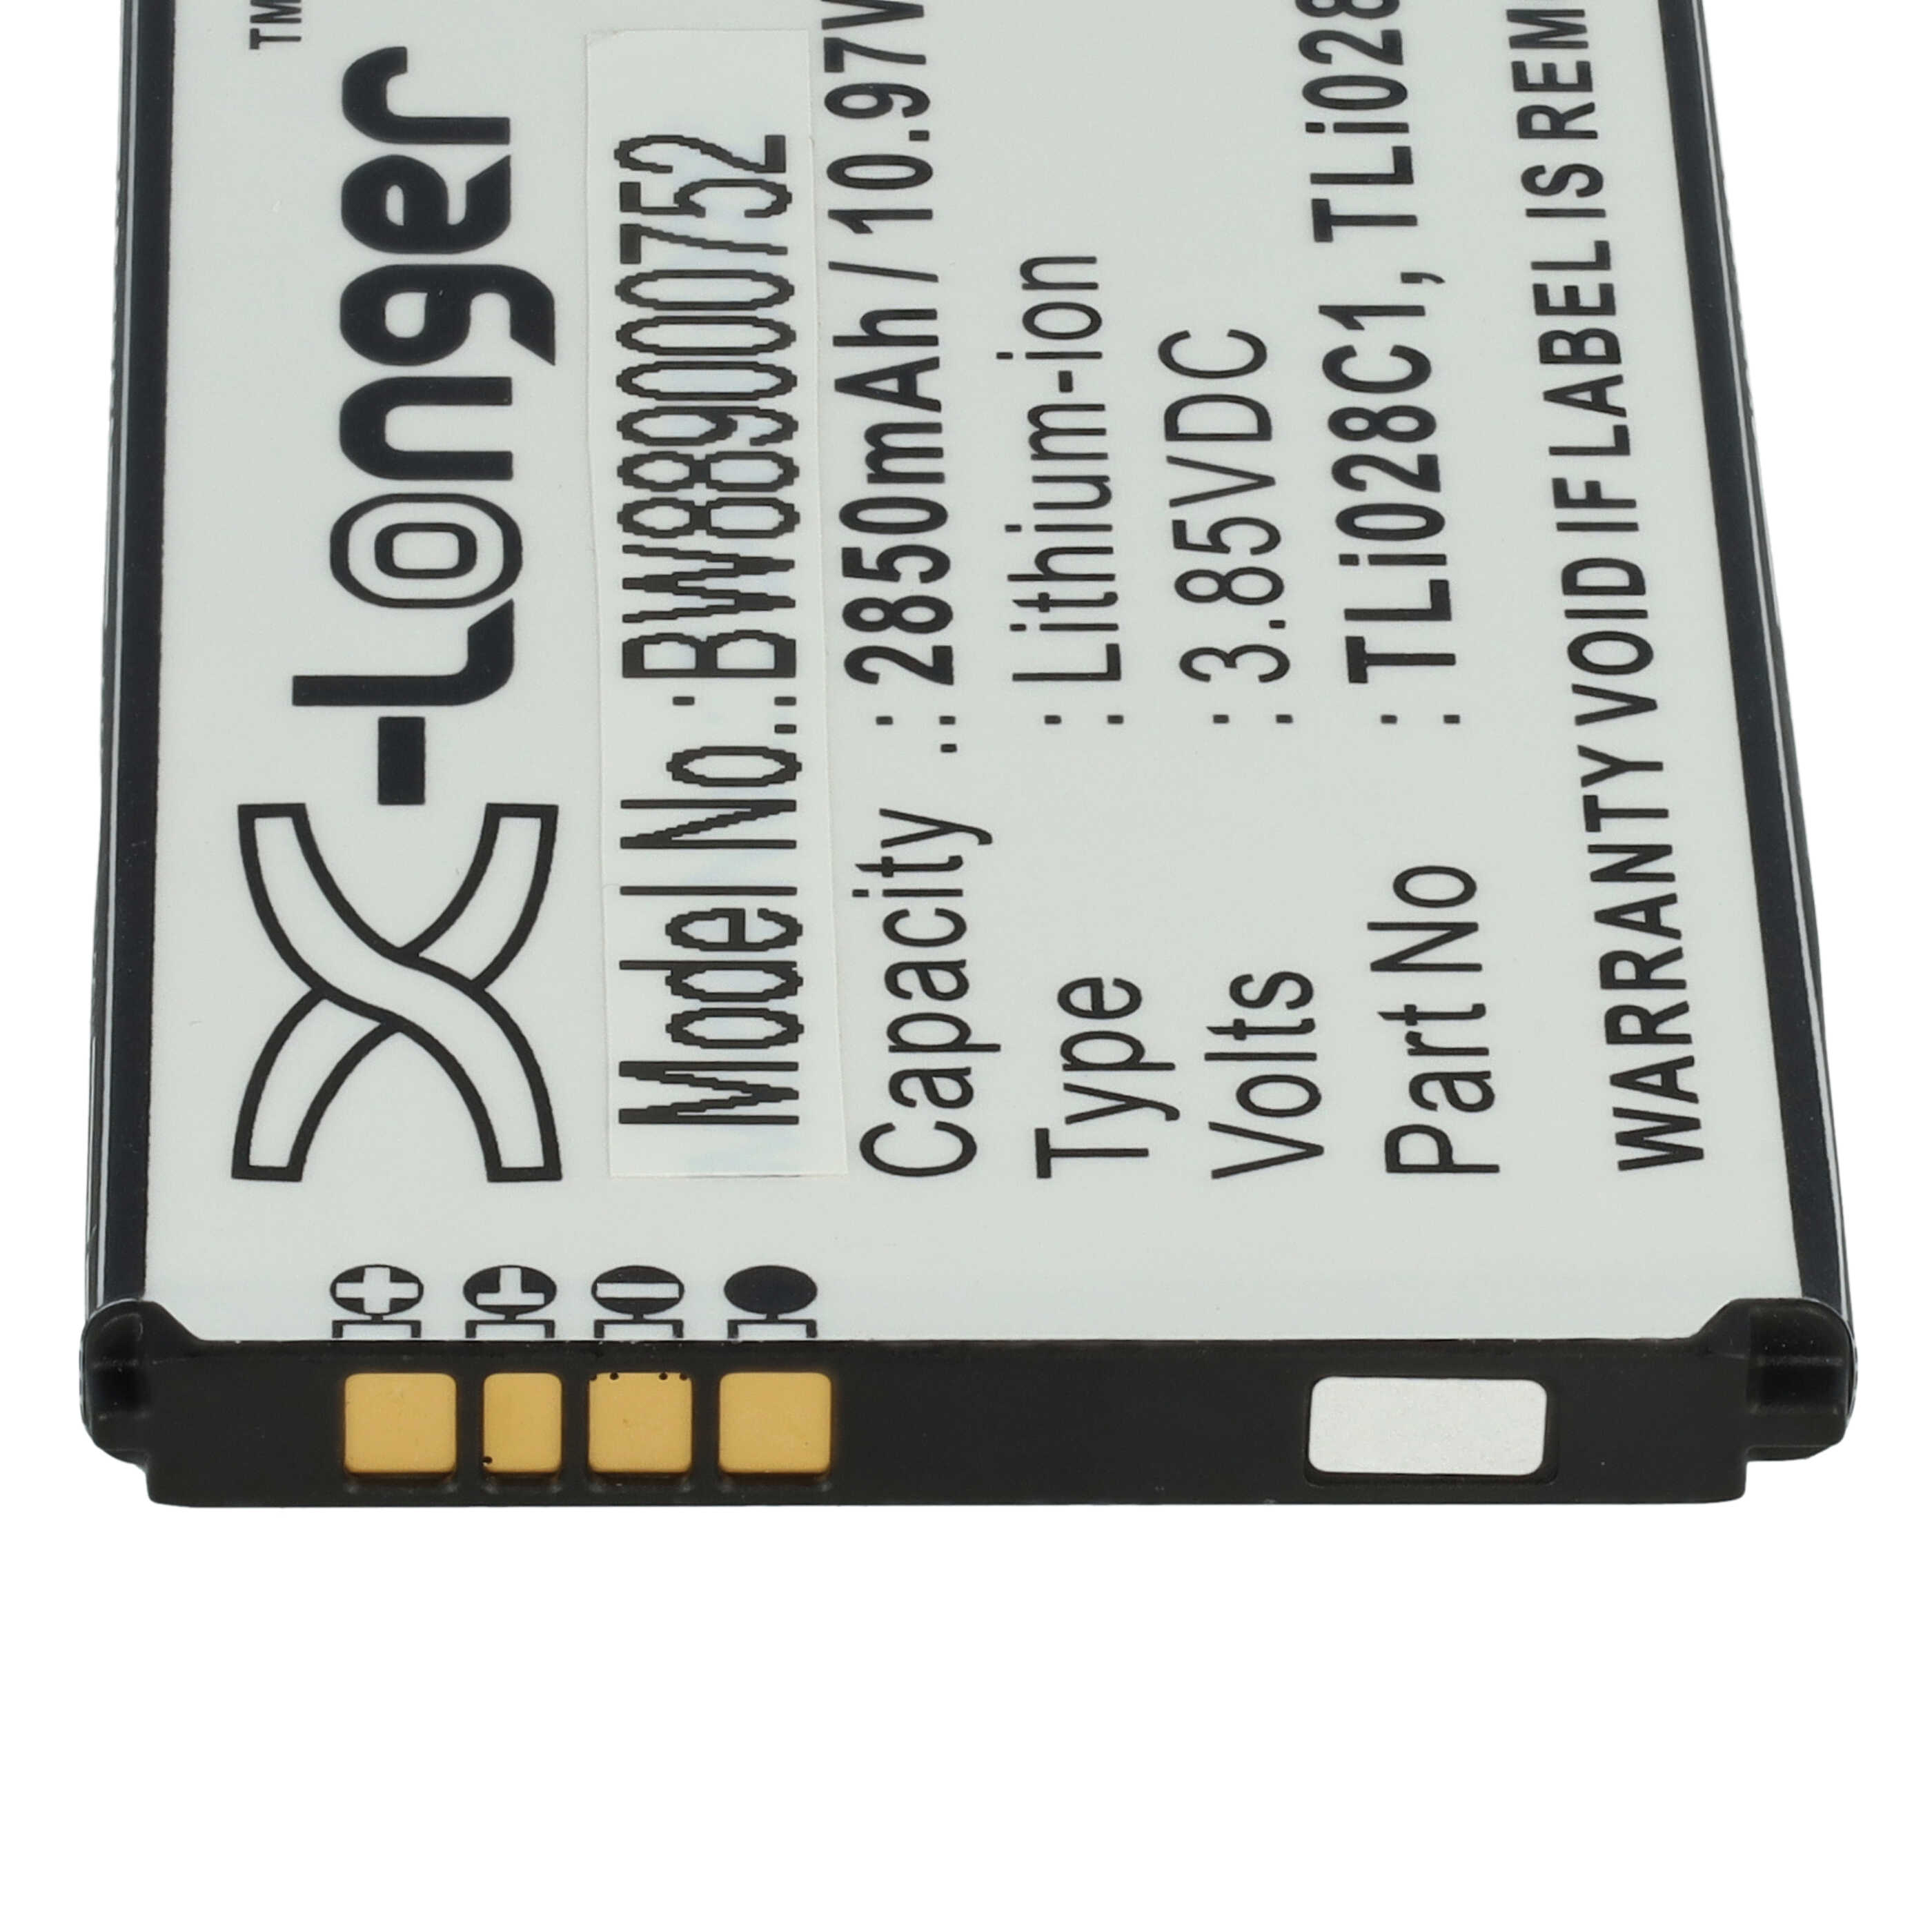 Mobile Phone Battery Replacement for Alcatel TLi028C1, TLi028C7 - 2850mAh 3.85V Li-Ion